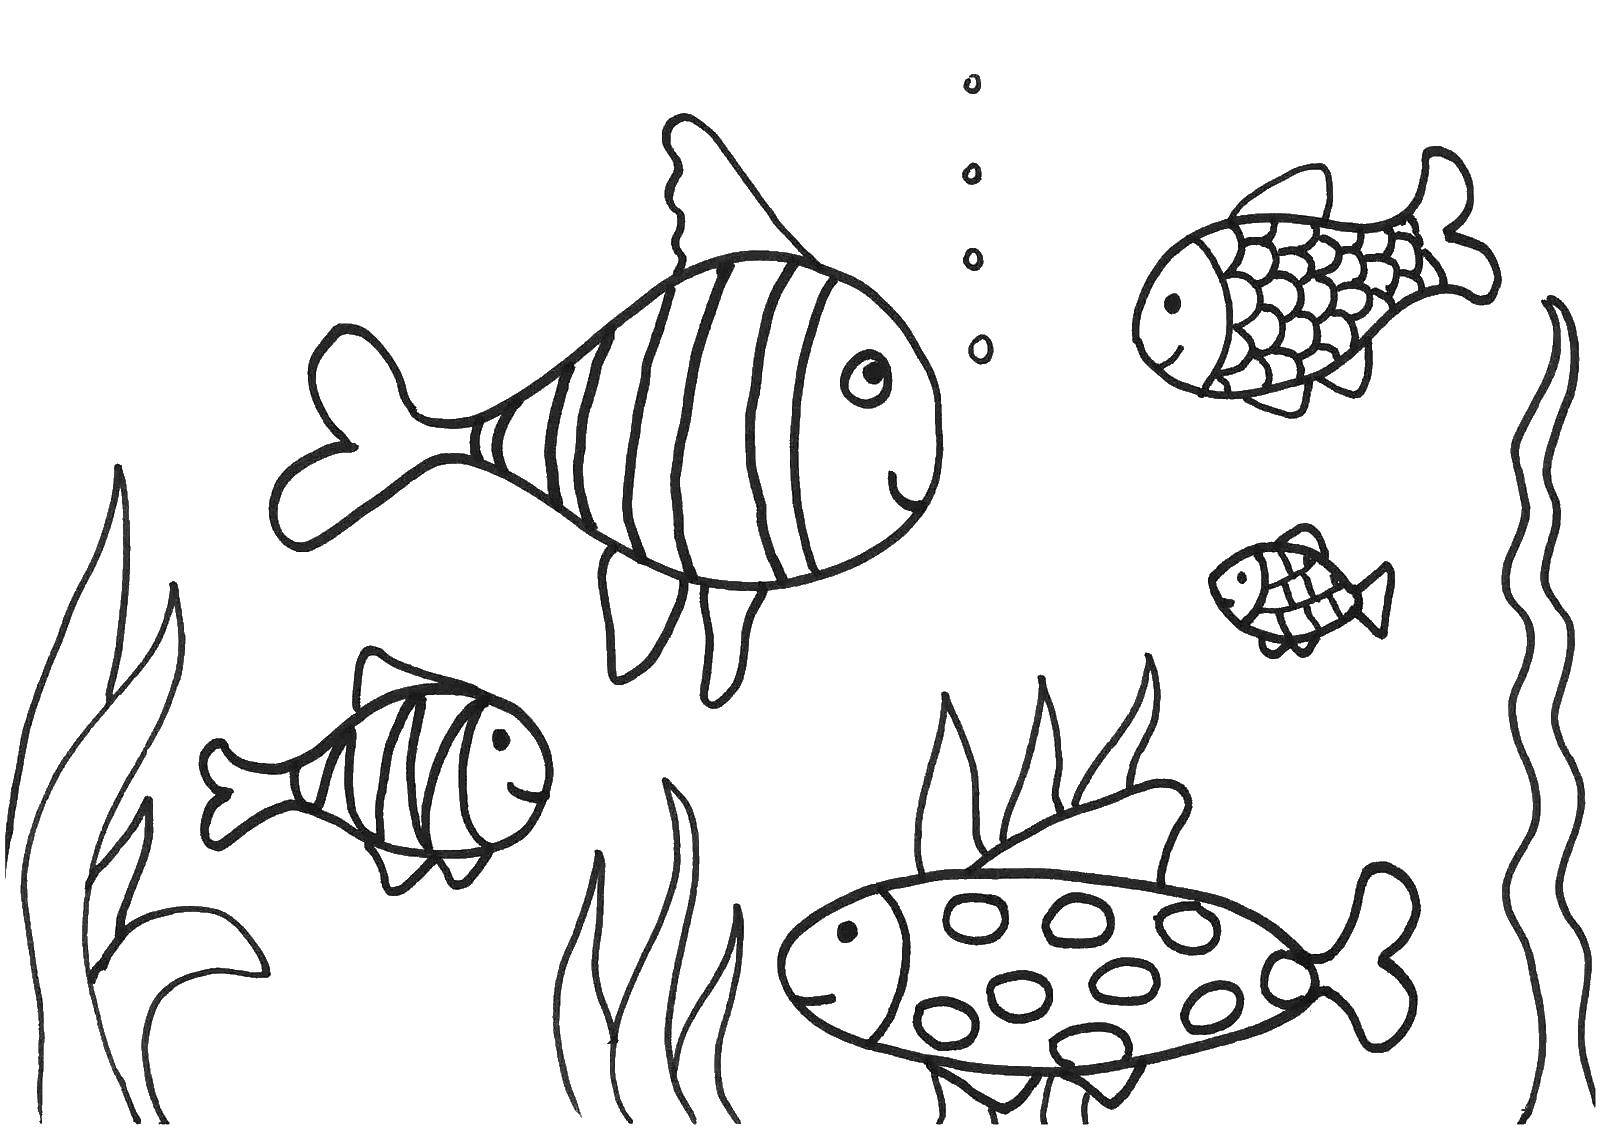 Coloring Fish. Category Fish. Tags:  fish, seaweed, bubbles.